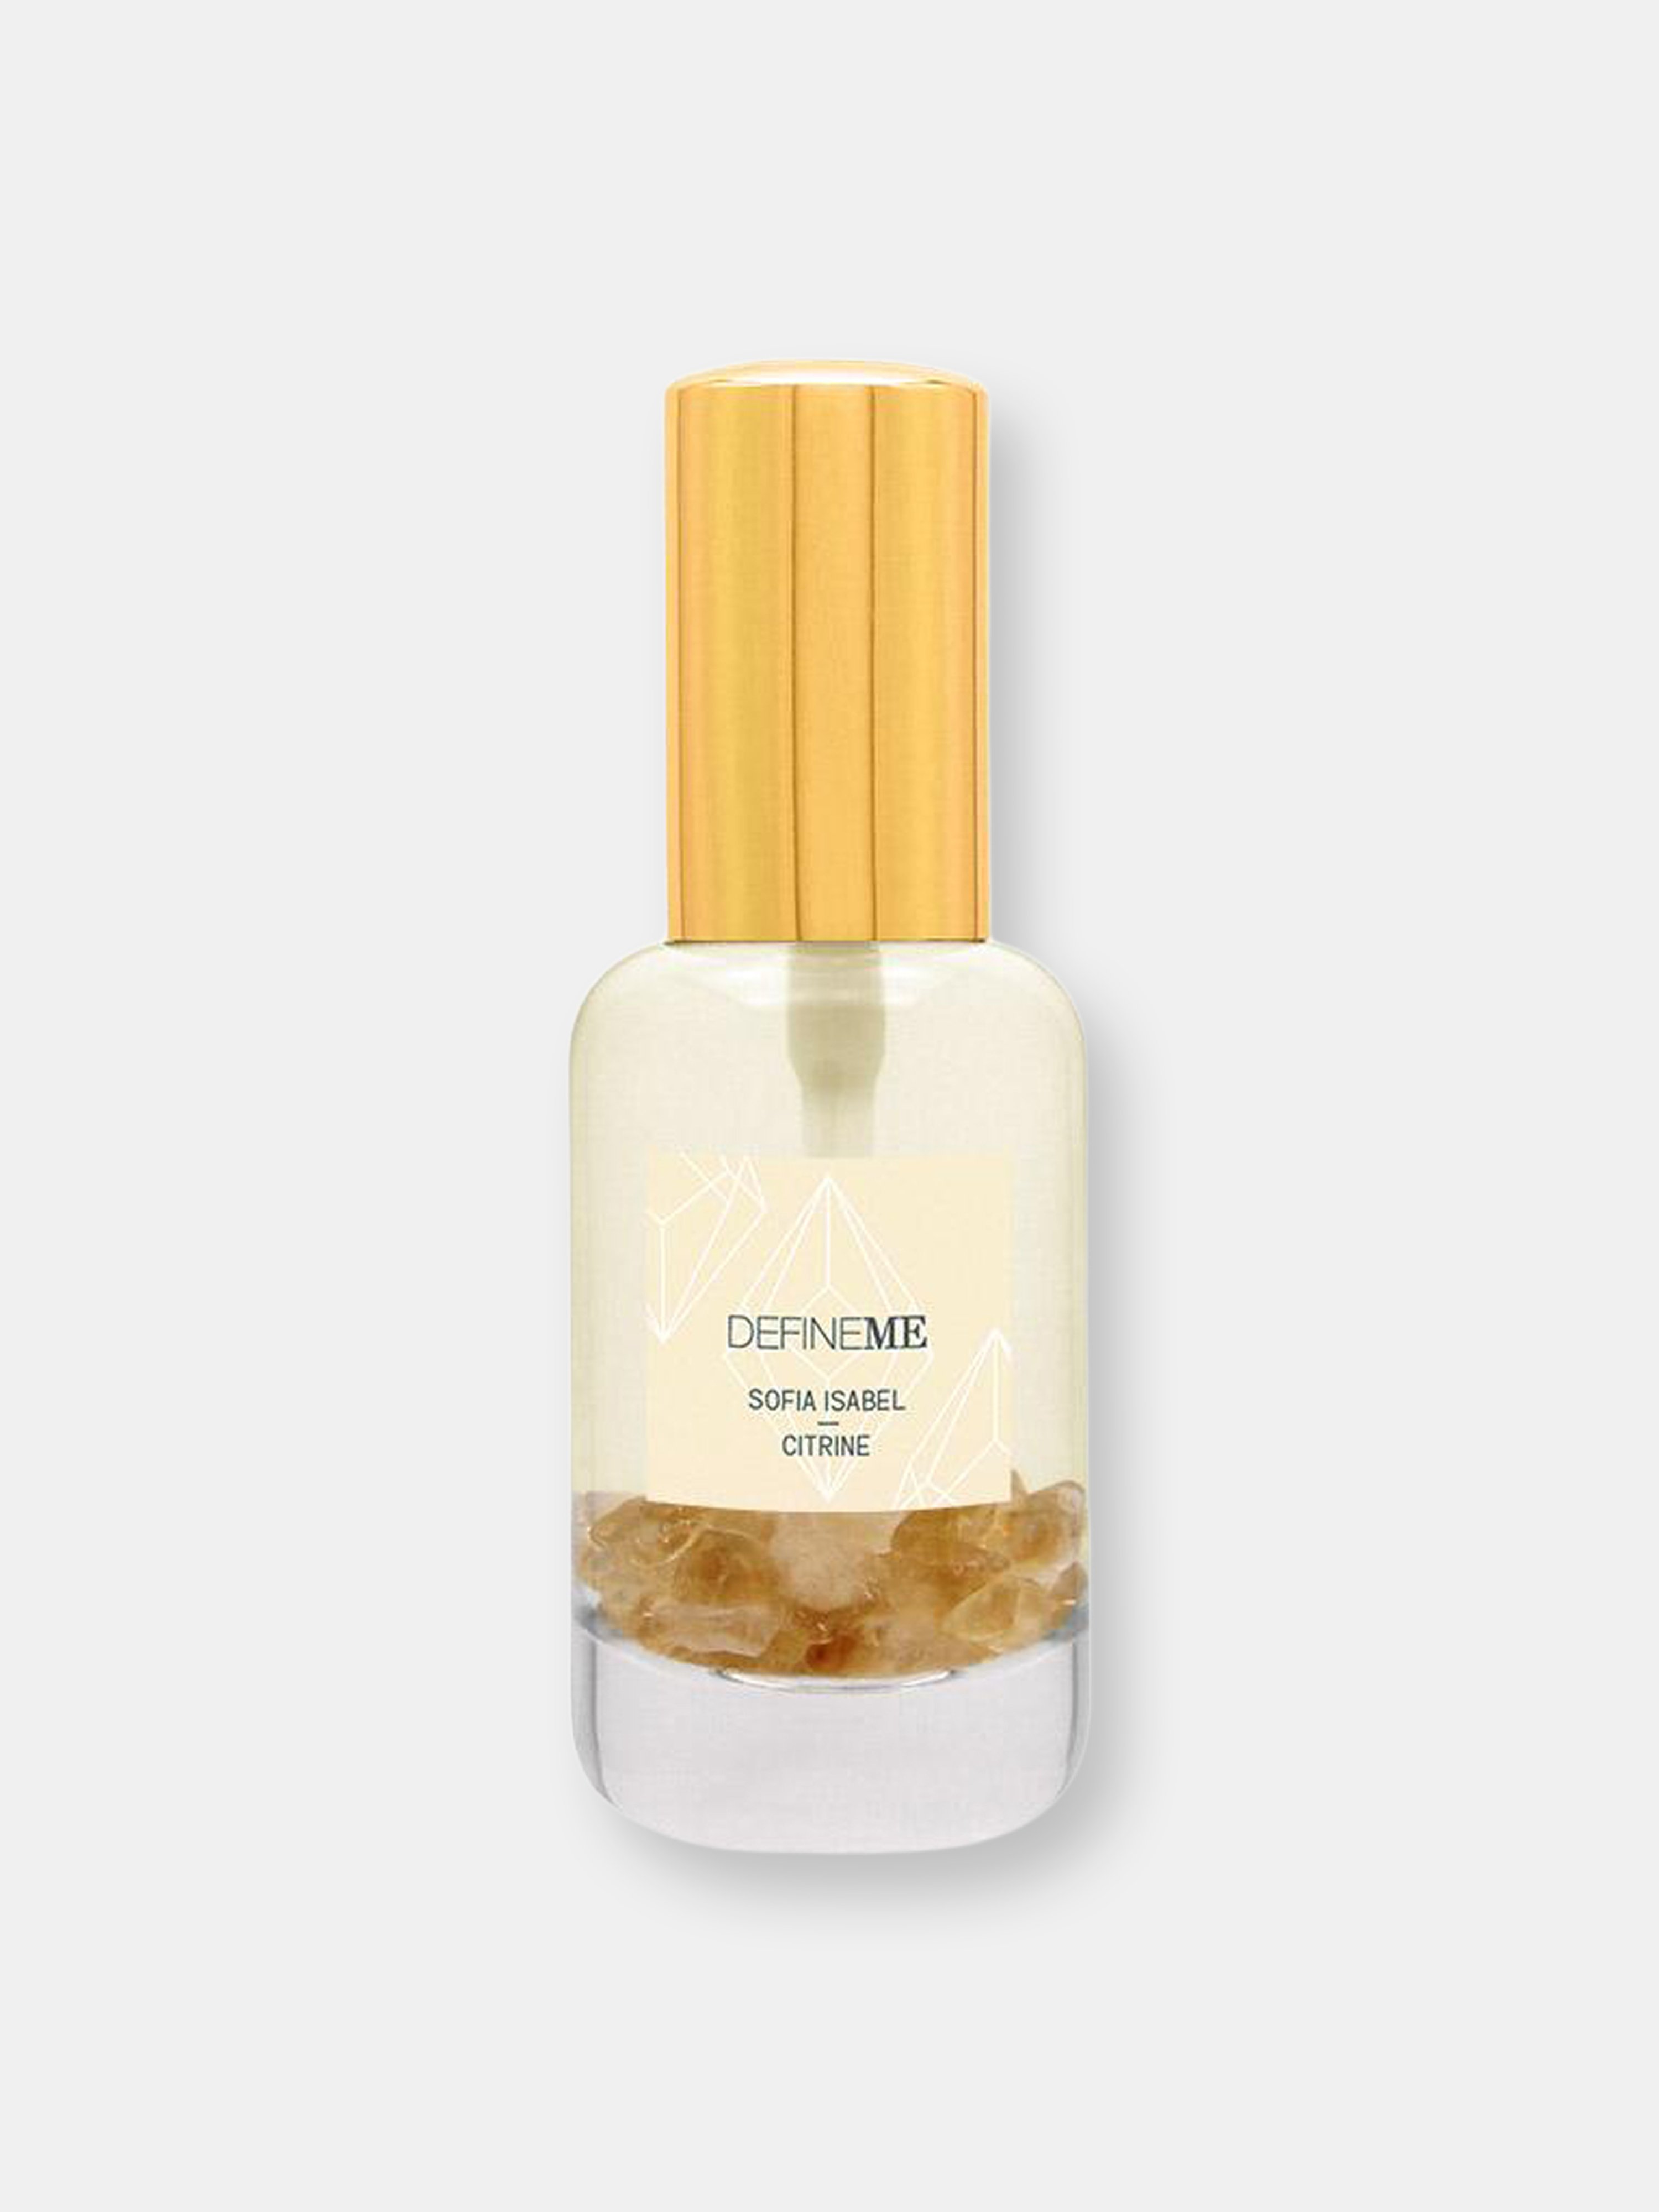 Defineme Fragrances Sofia Isabel Crystal Infused Natural Perfume Mist